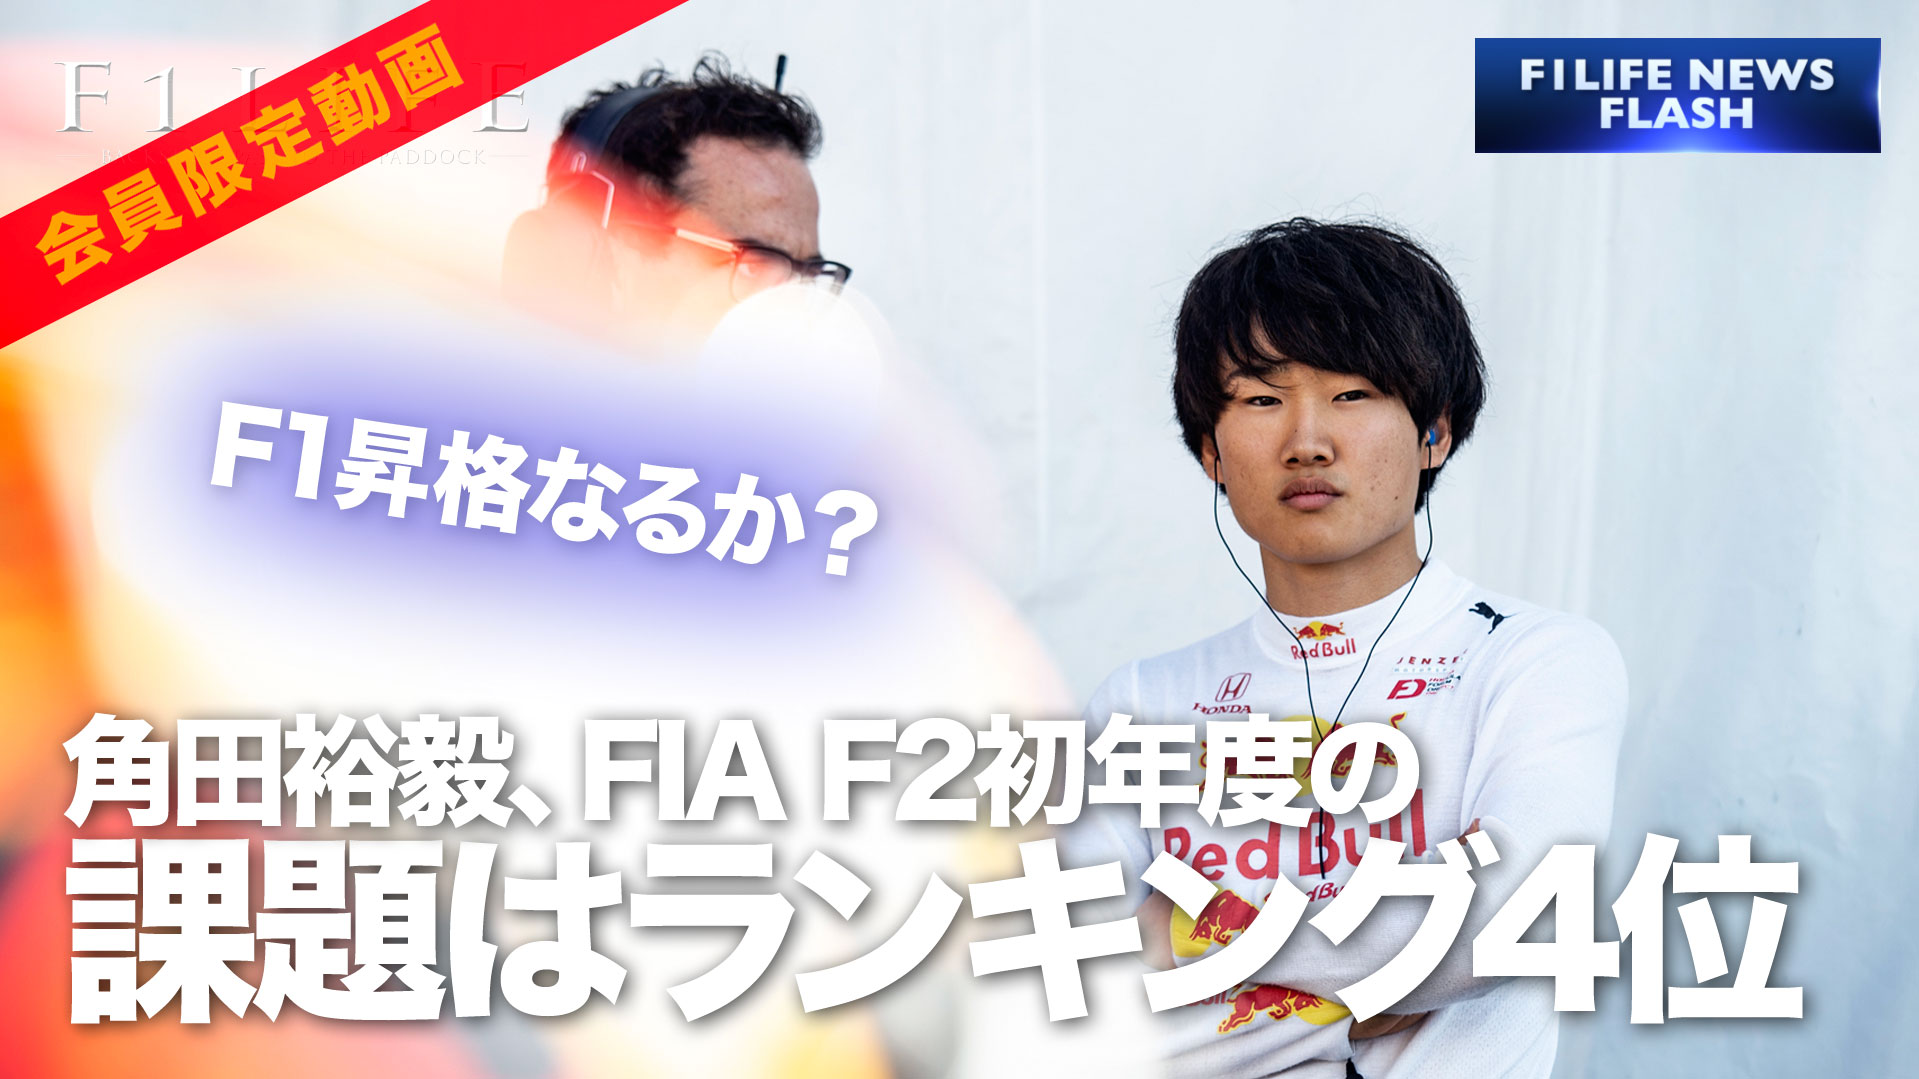 【F1LIFE CHANNEL】角田裕毅、FIA F2初年度の課題は「ランキング4位以上」【スーパーライセンス】